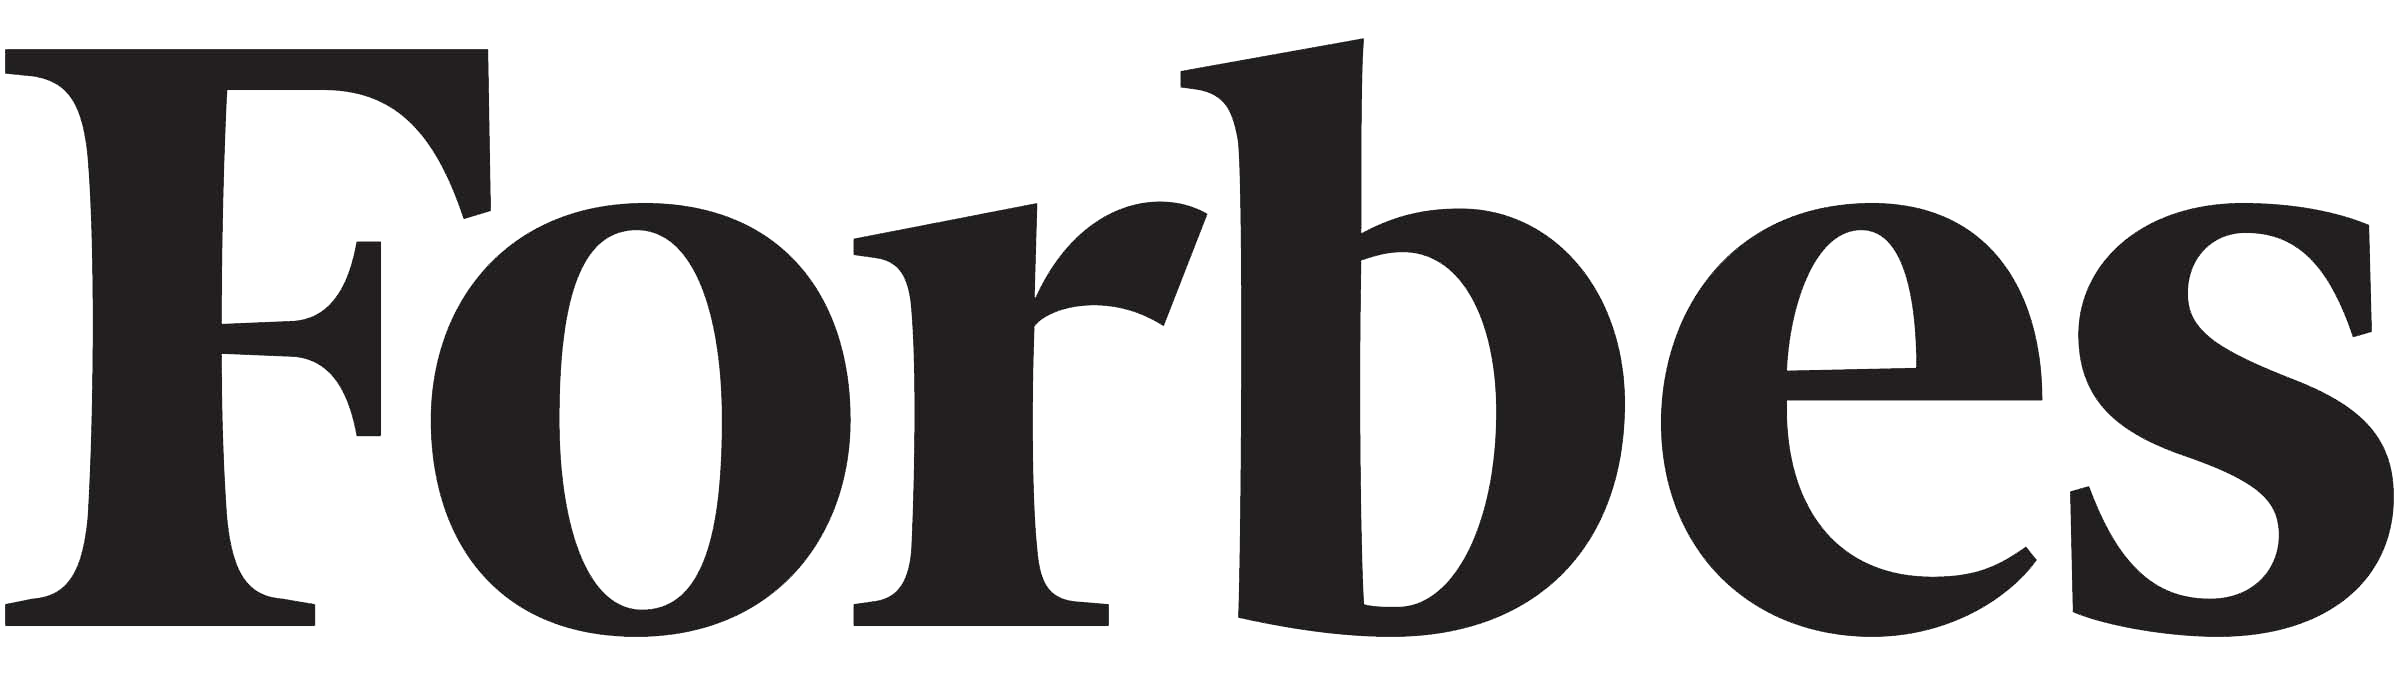 Image result for forbes logo